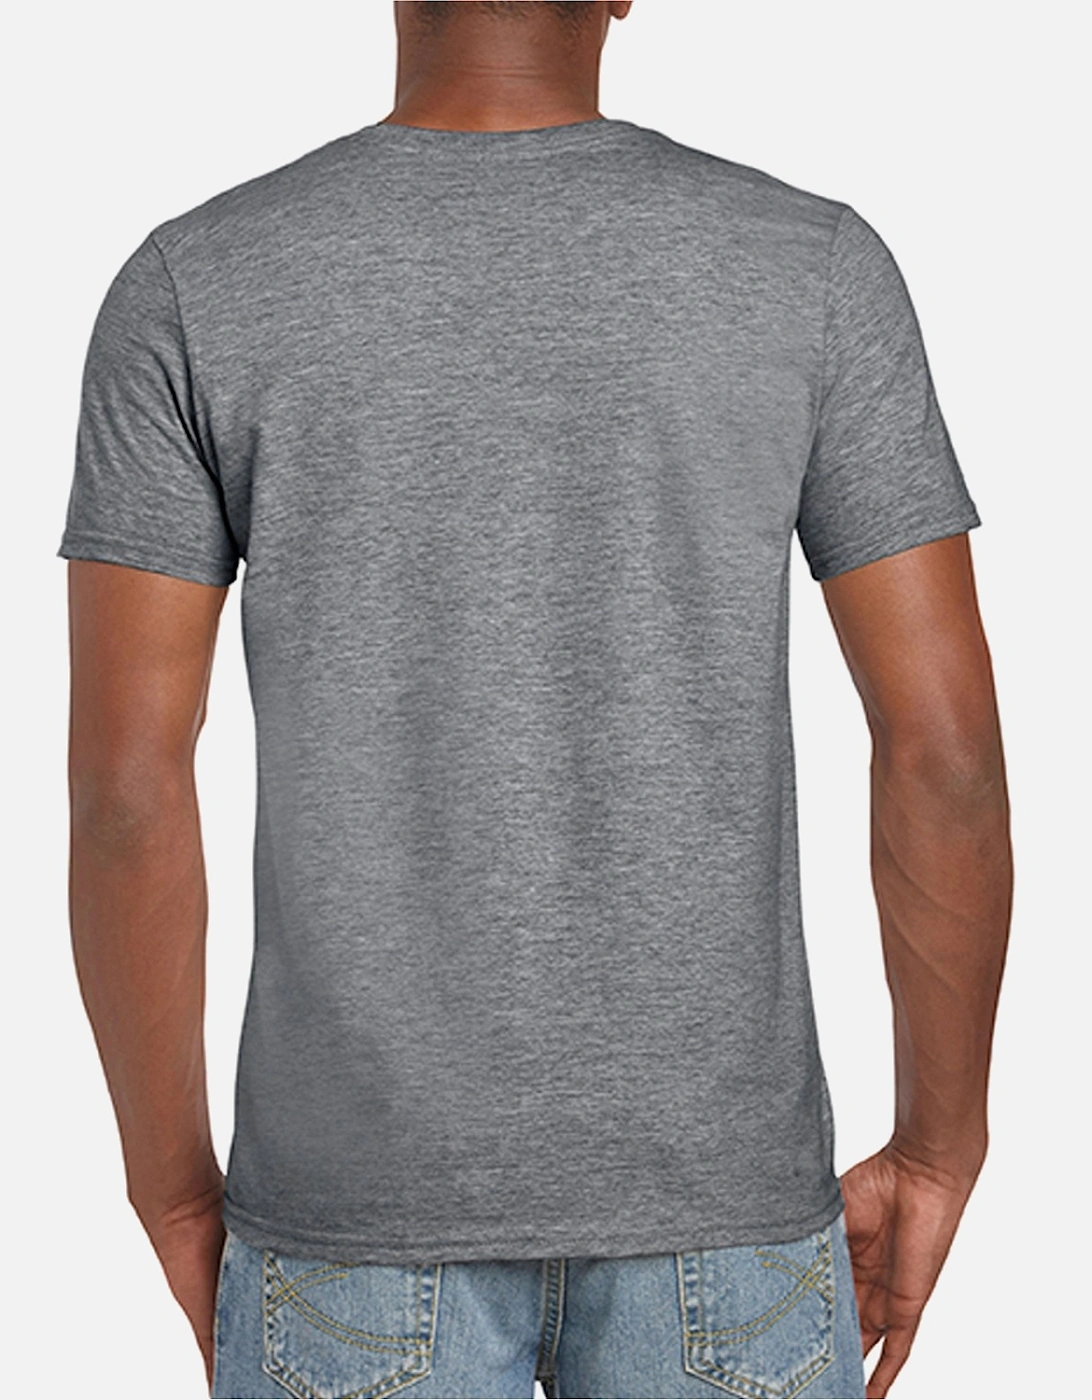 Unisex Adult Ringspun Cotton Soft Touch T-Shirt